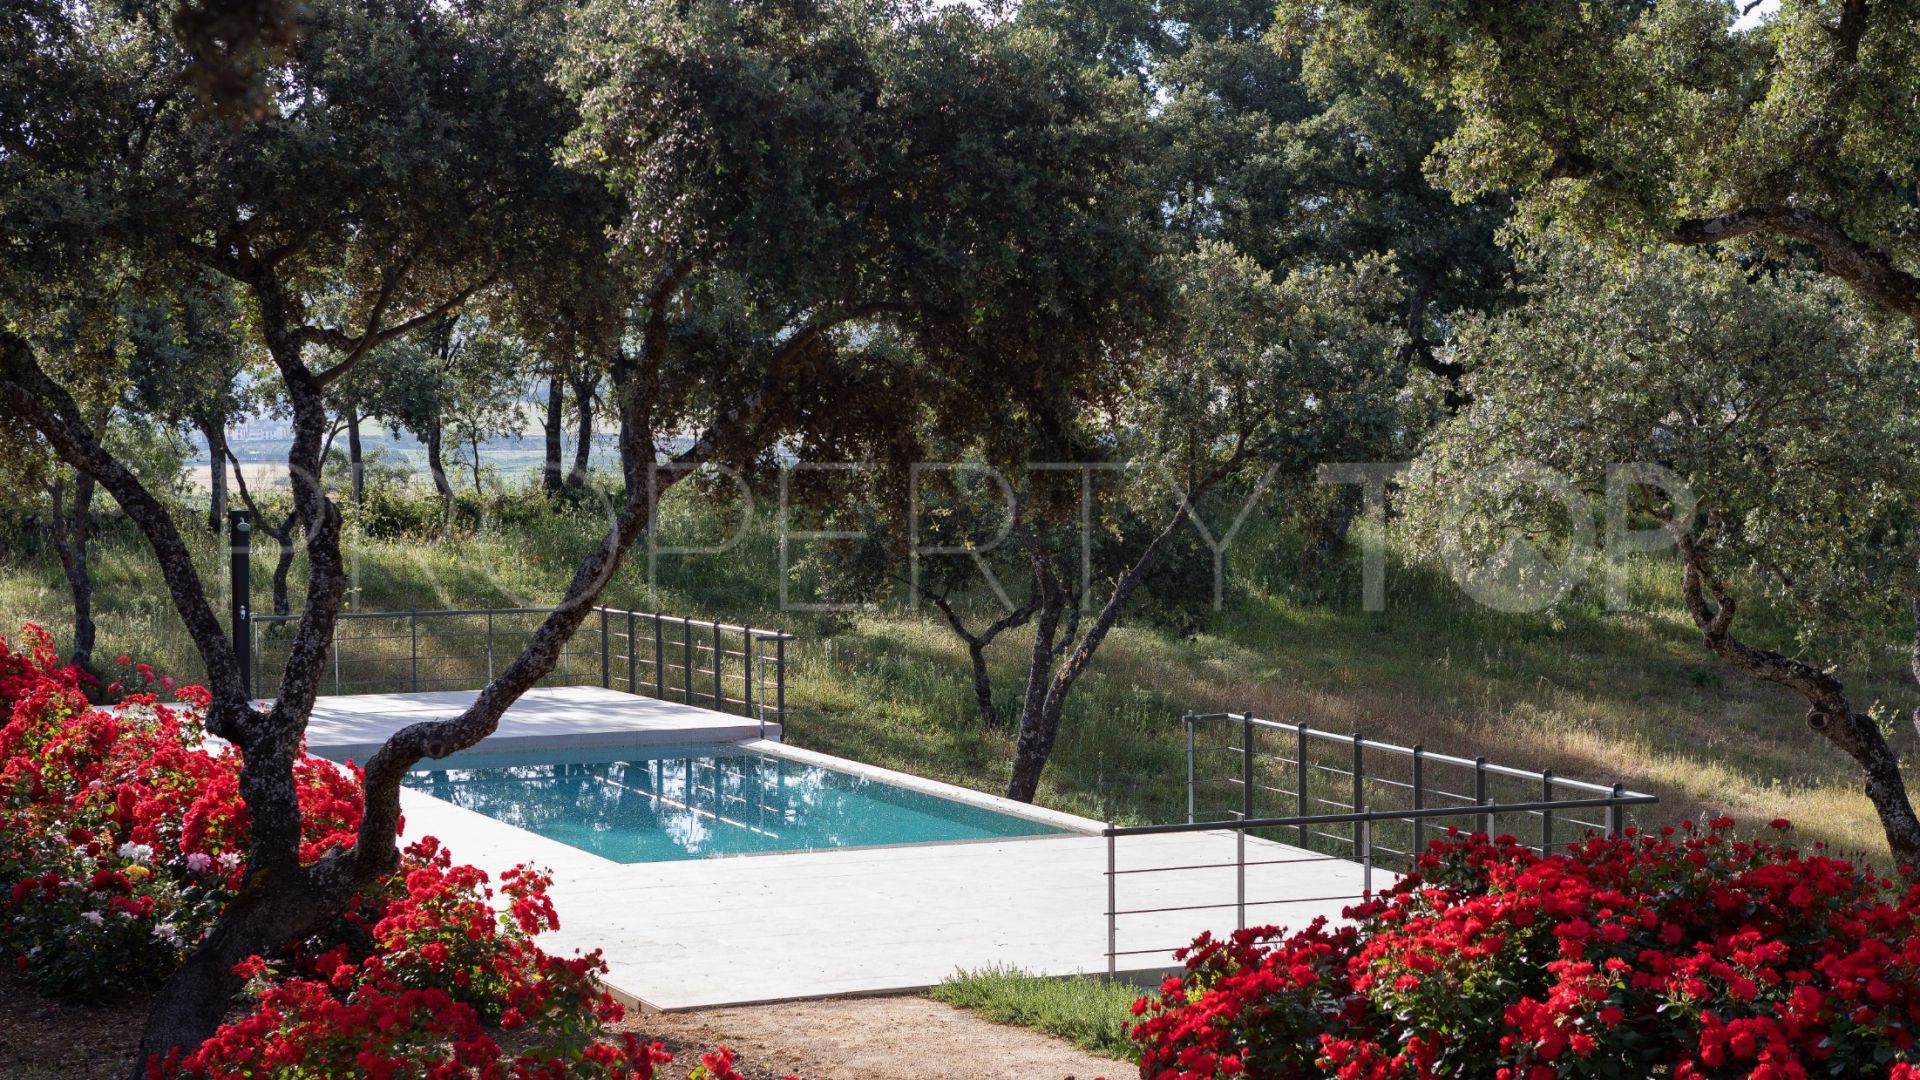 4 bedrooms villa for sale in Ronda